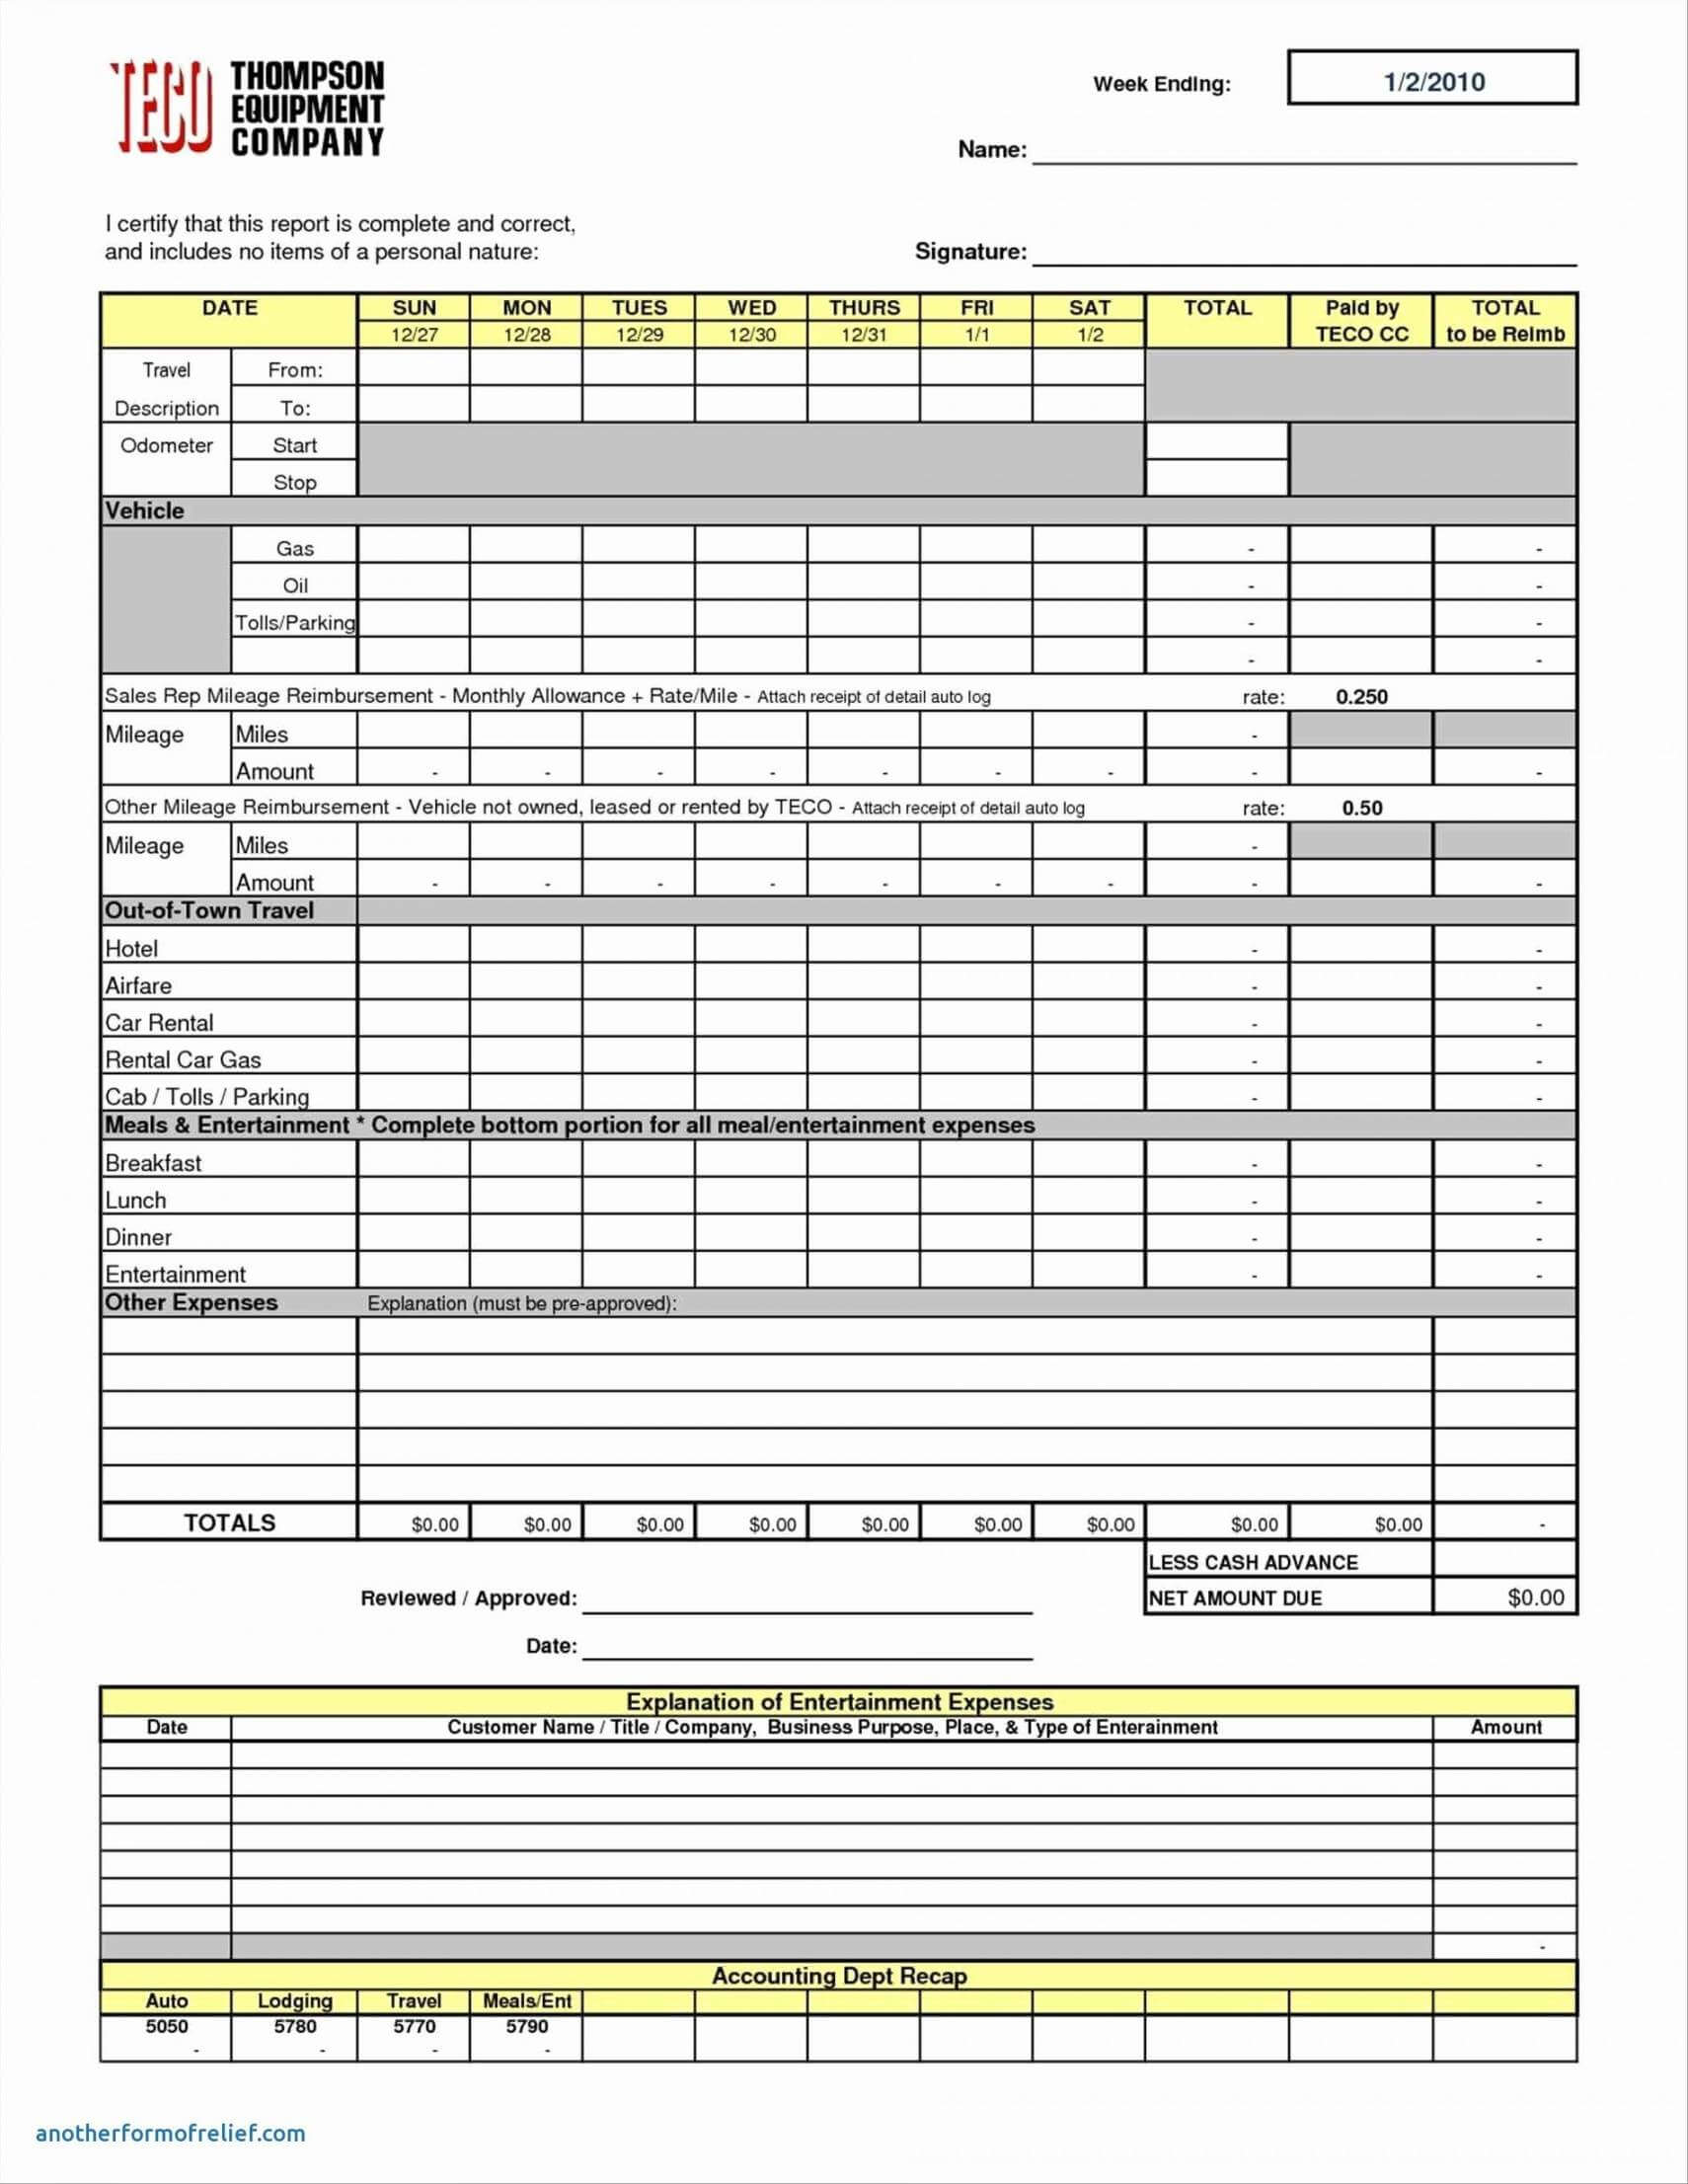 Sample Balance Sheet For Llc Glendale Community Document In Air Balance Report Template